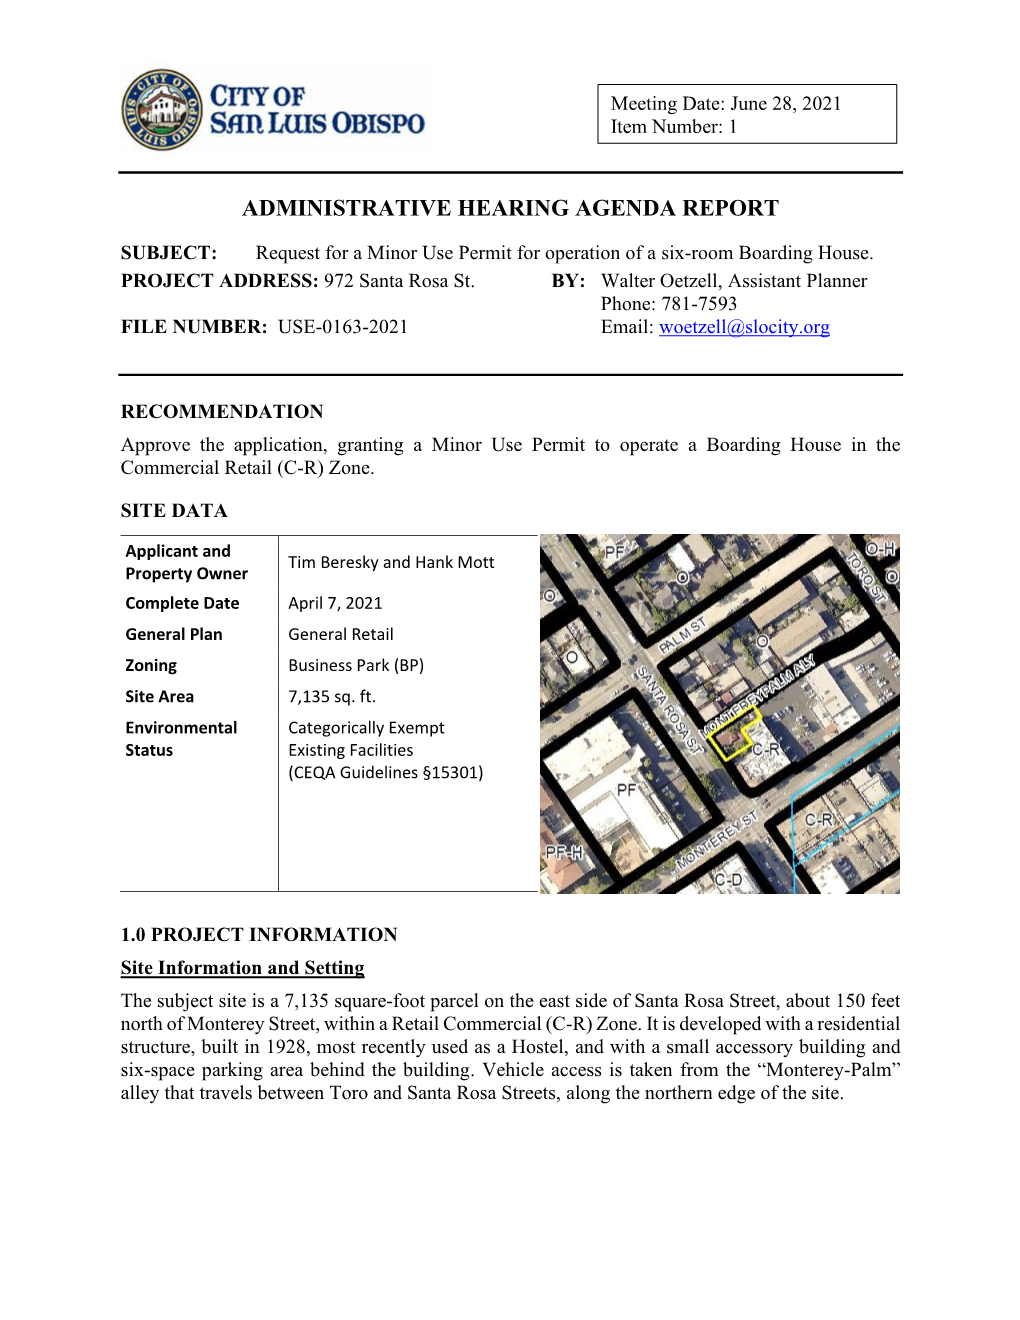 Administrative Hearing Agenda Report